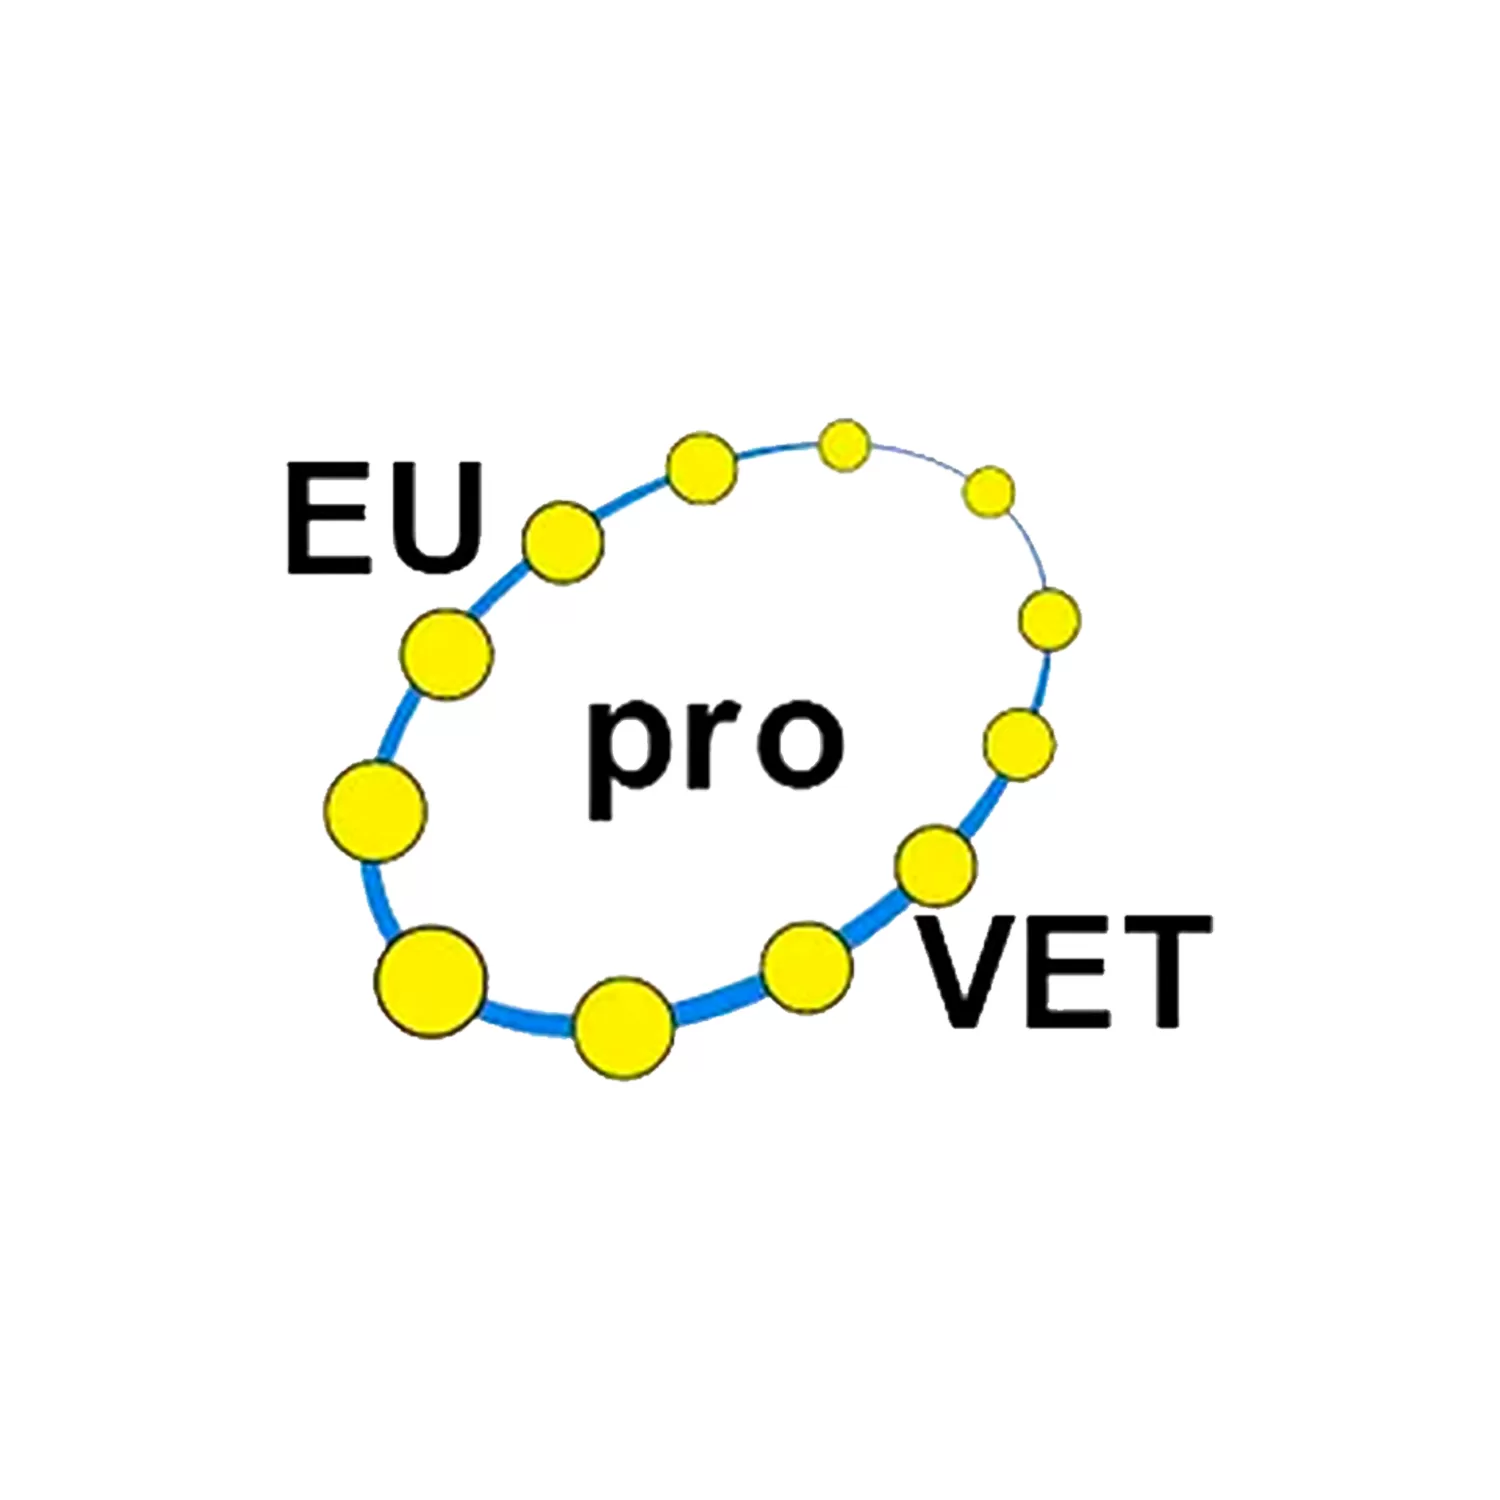 Euprovet logo